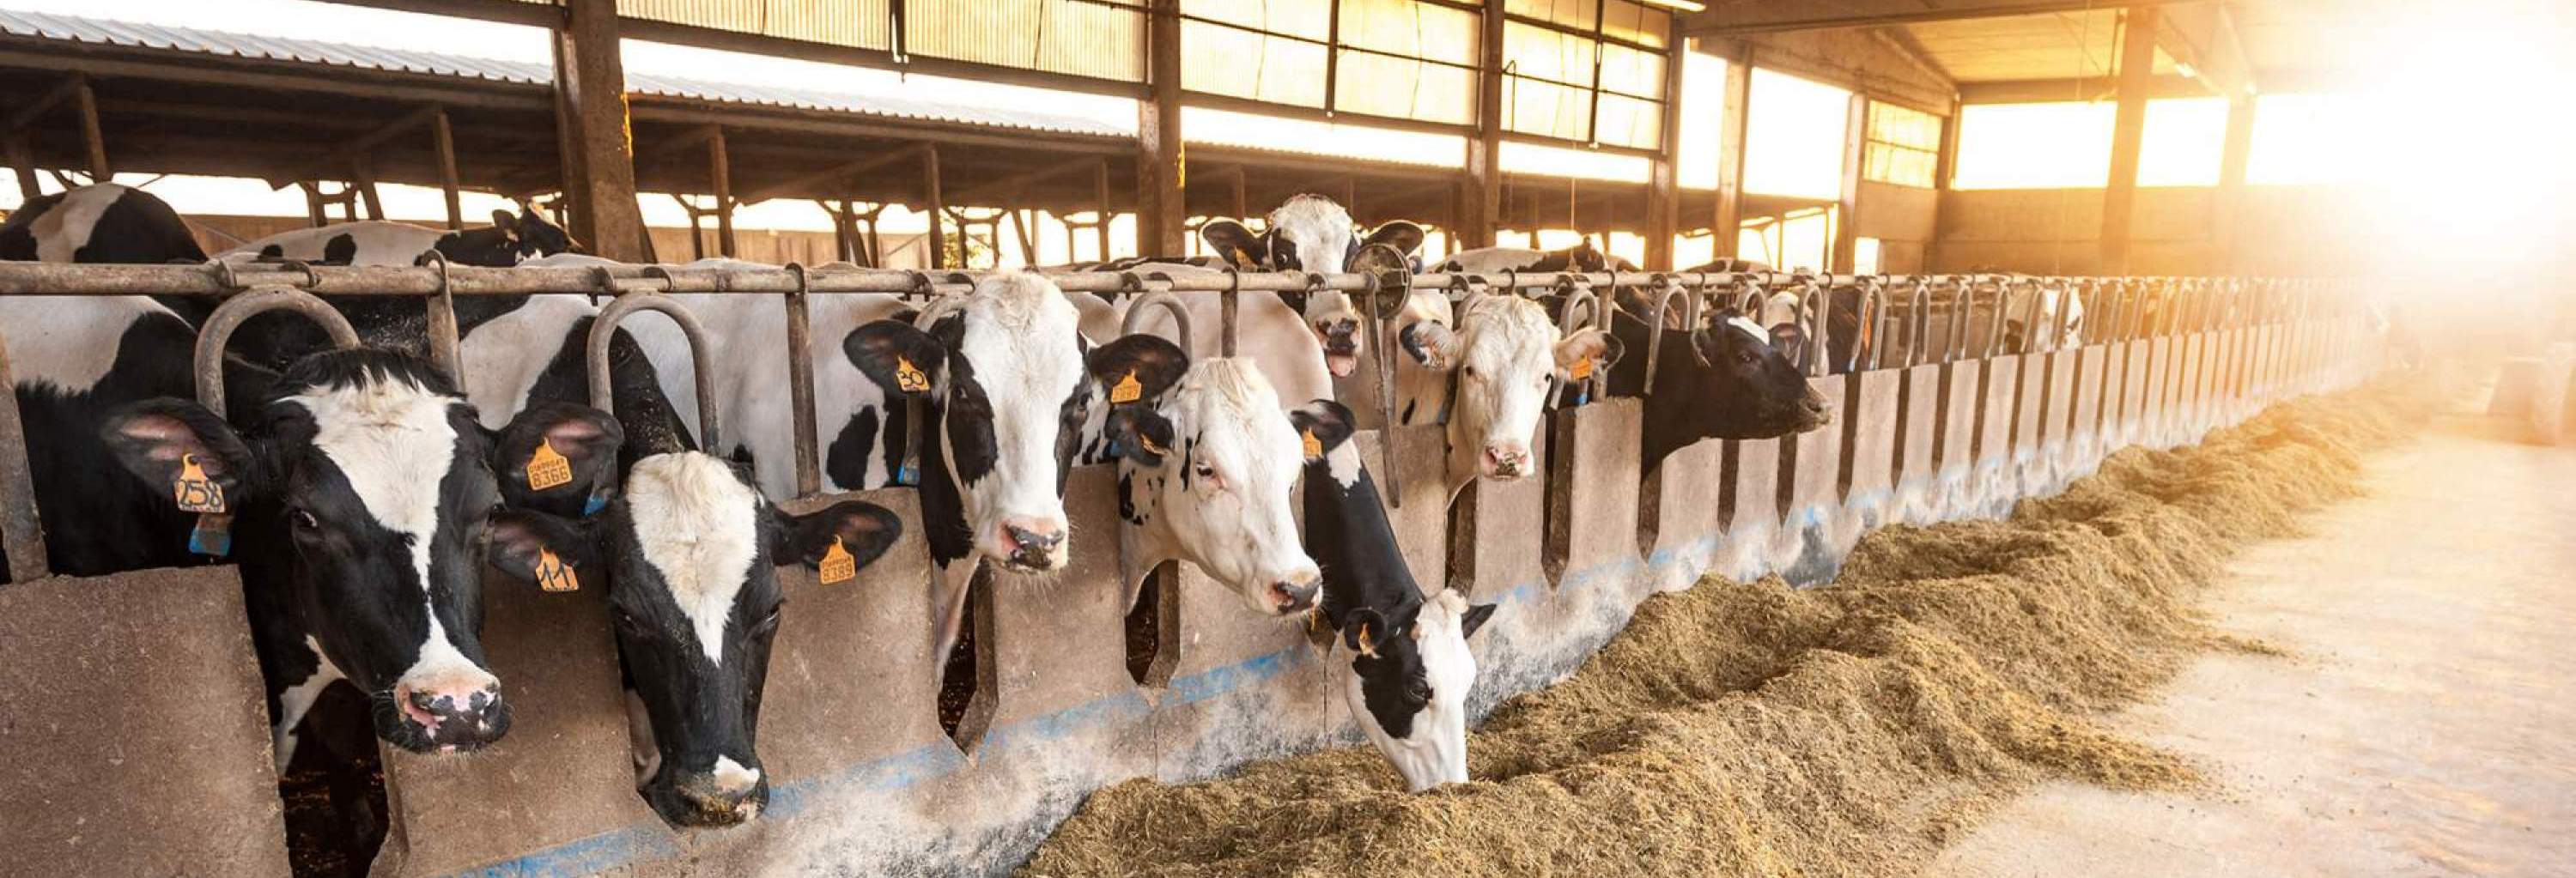 Kühe im Stall / Cows in the barn